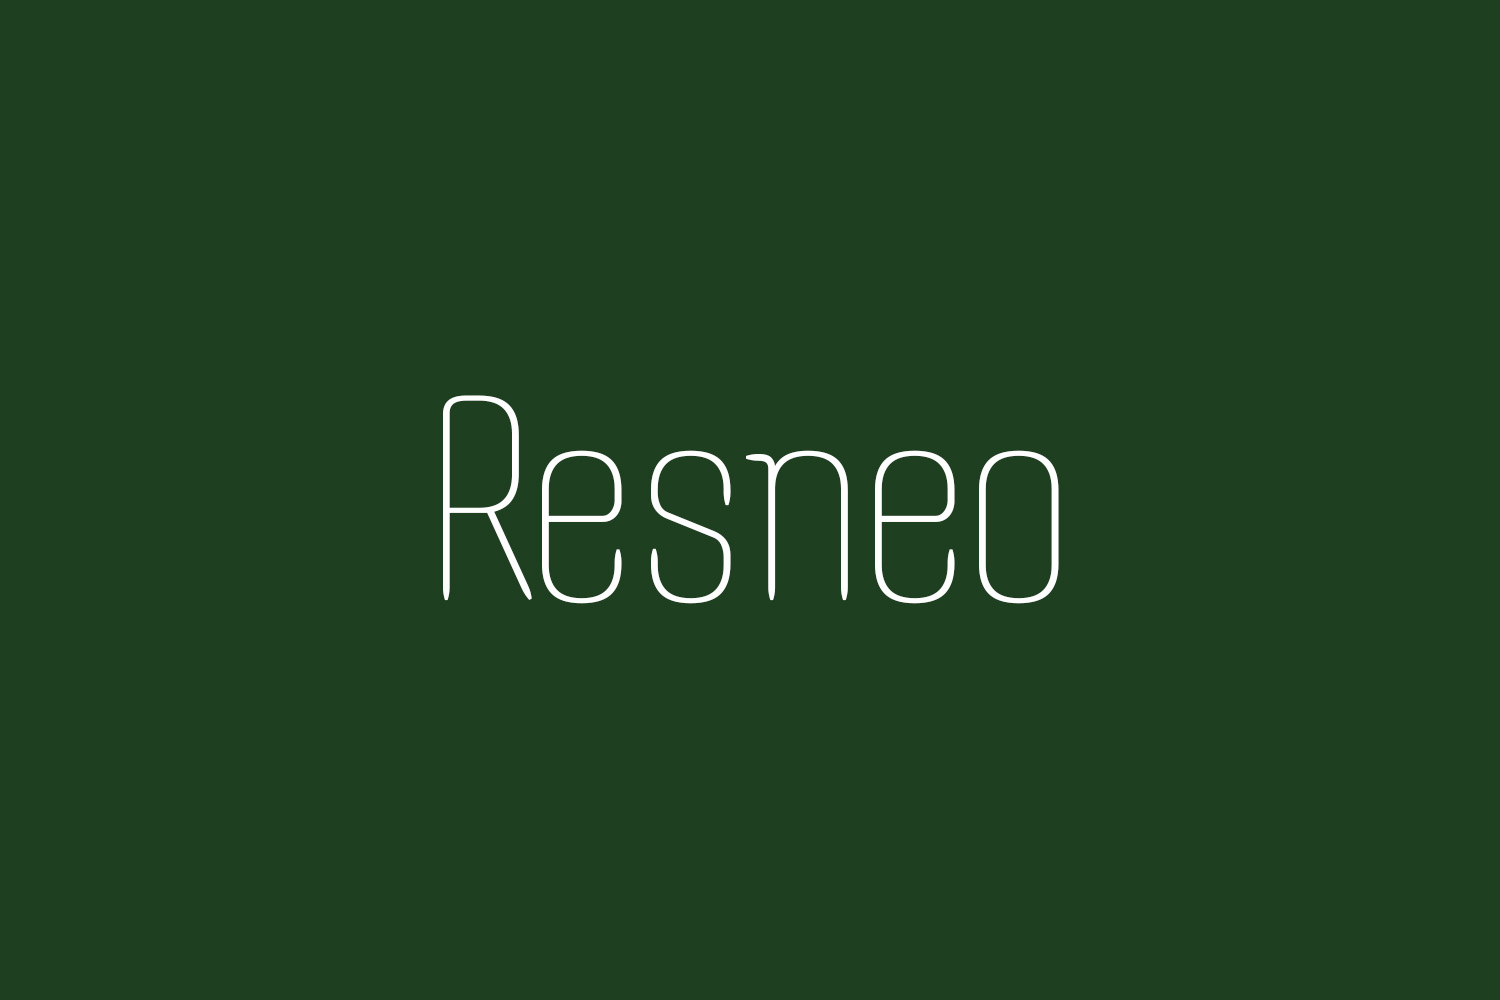 Resneo Free Font